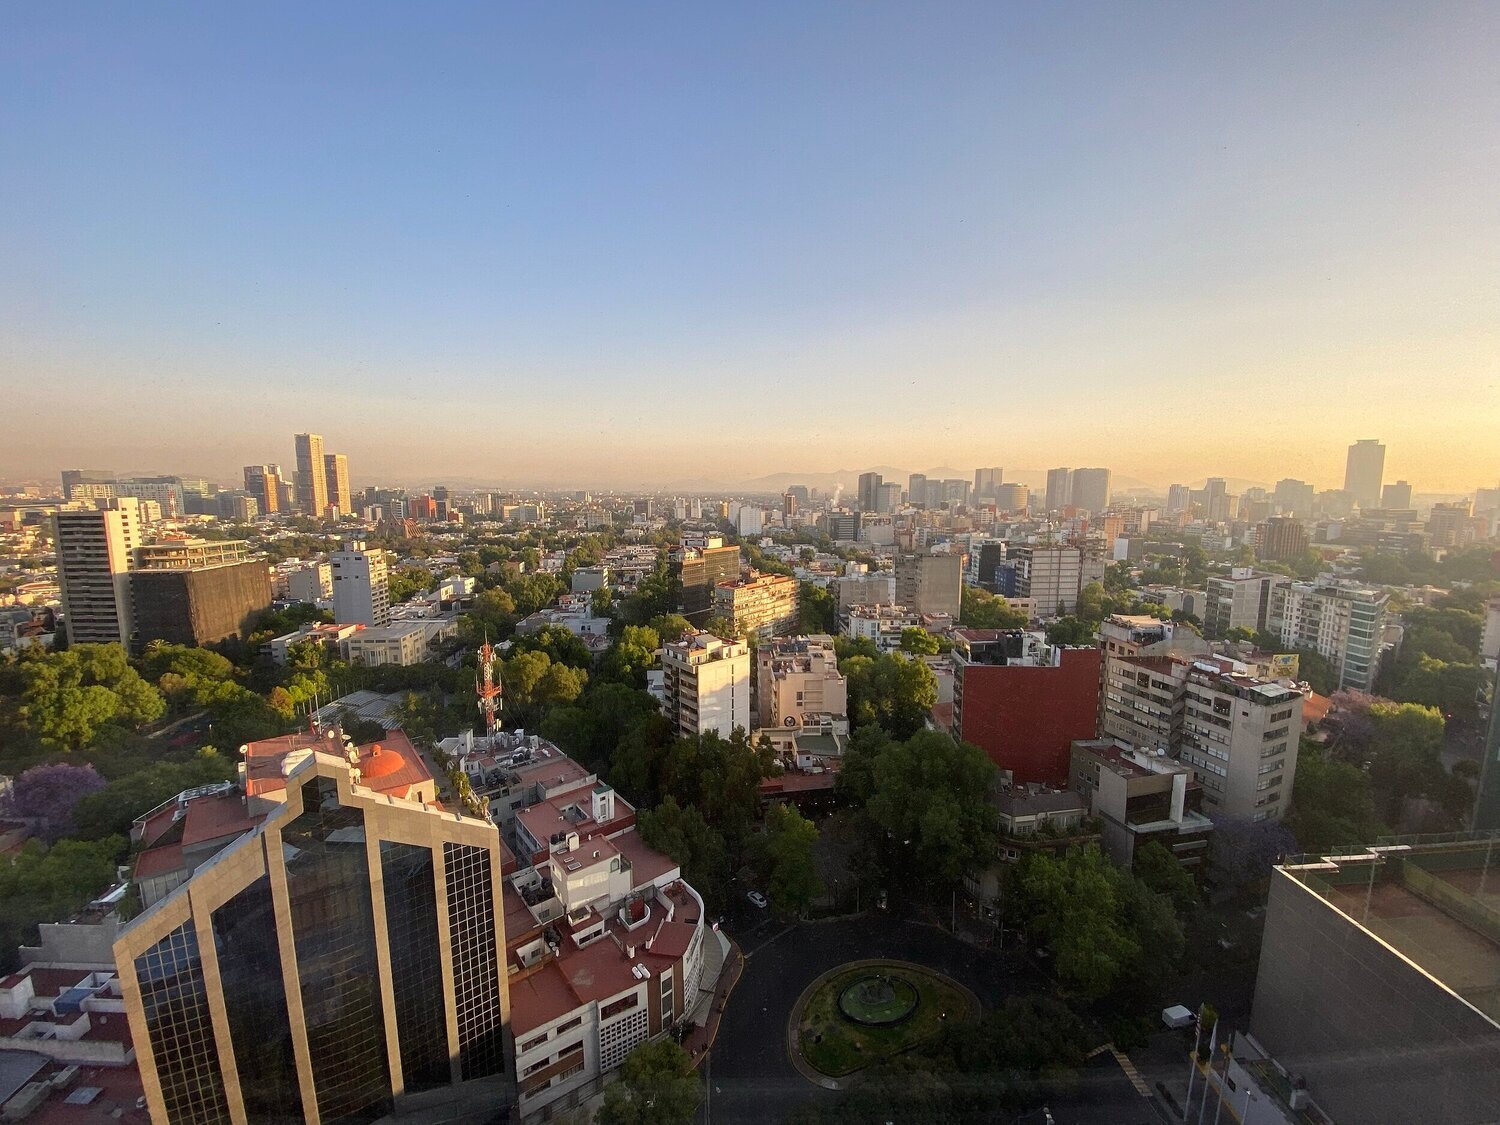 Hotels in Polanco, Mexico City